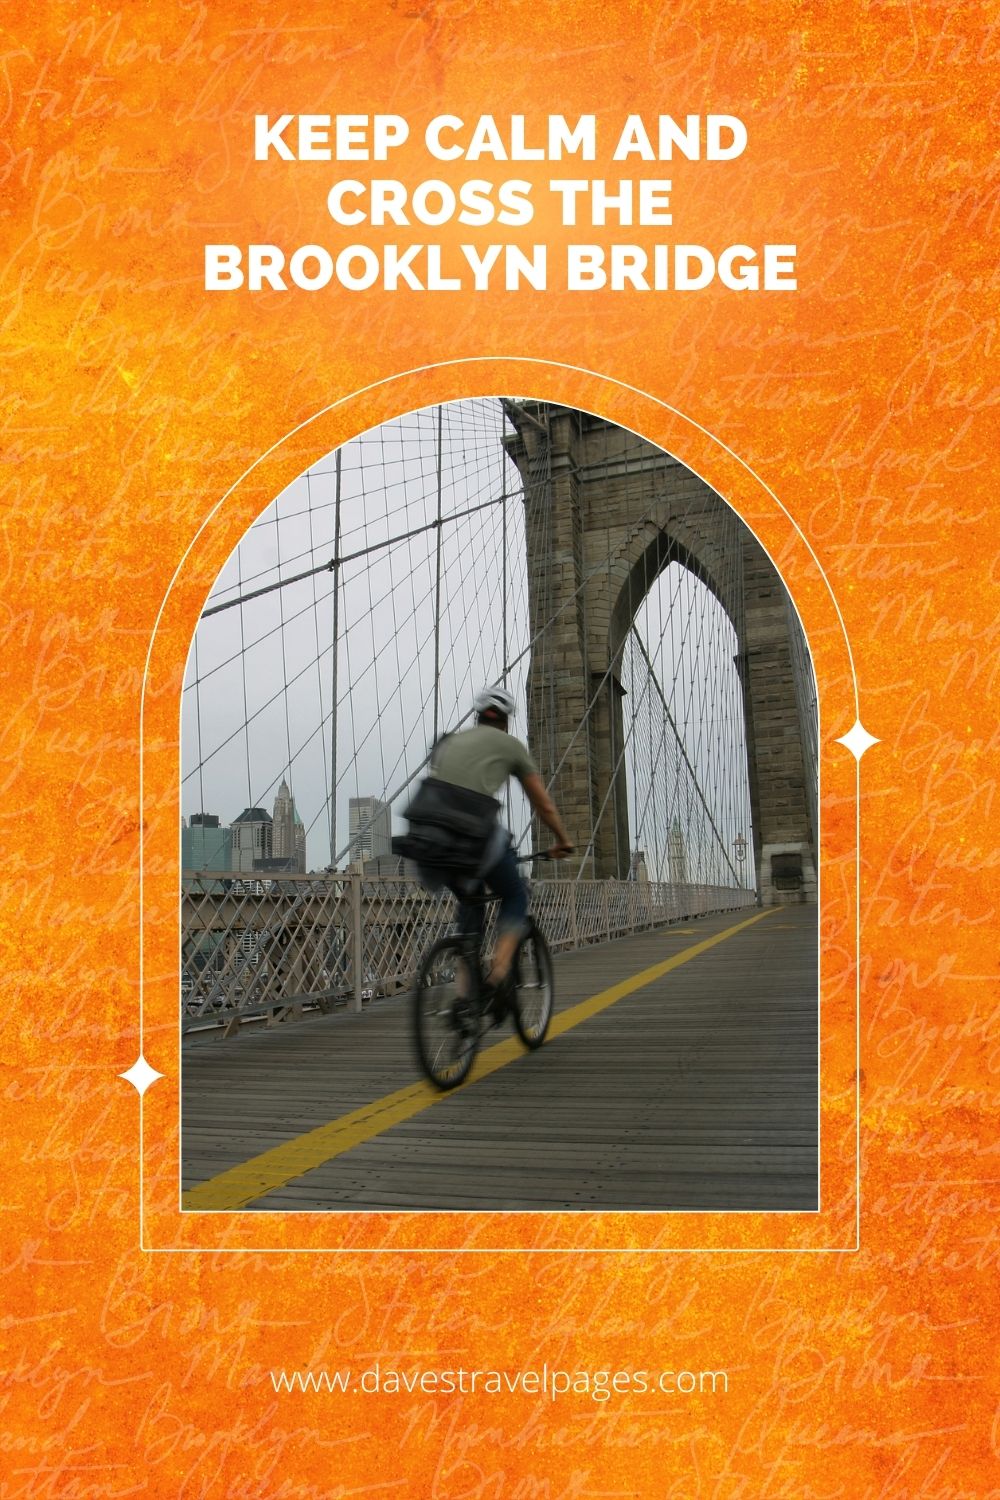 Keep calm and cross the Brooklyn bridge